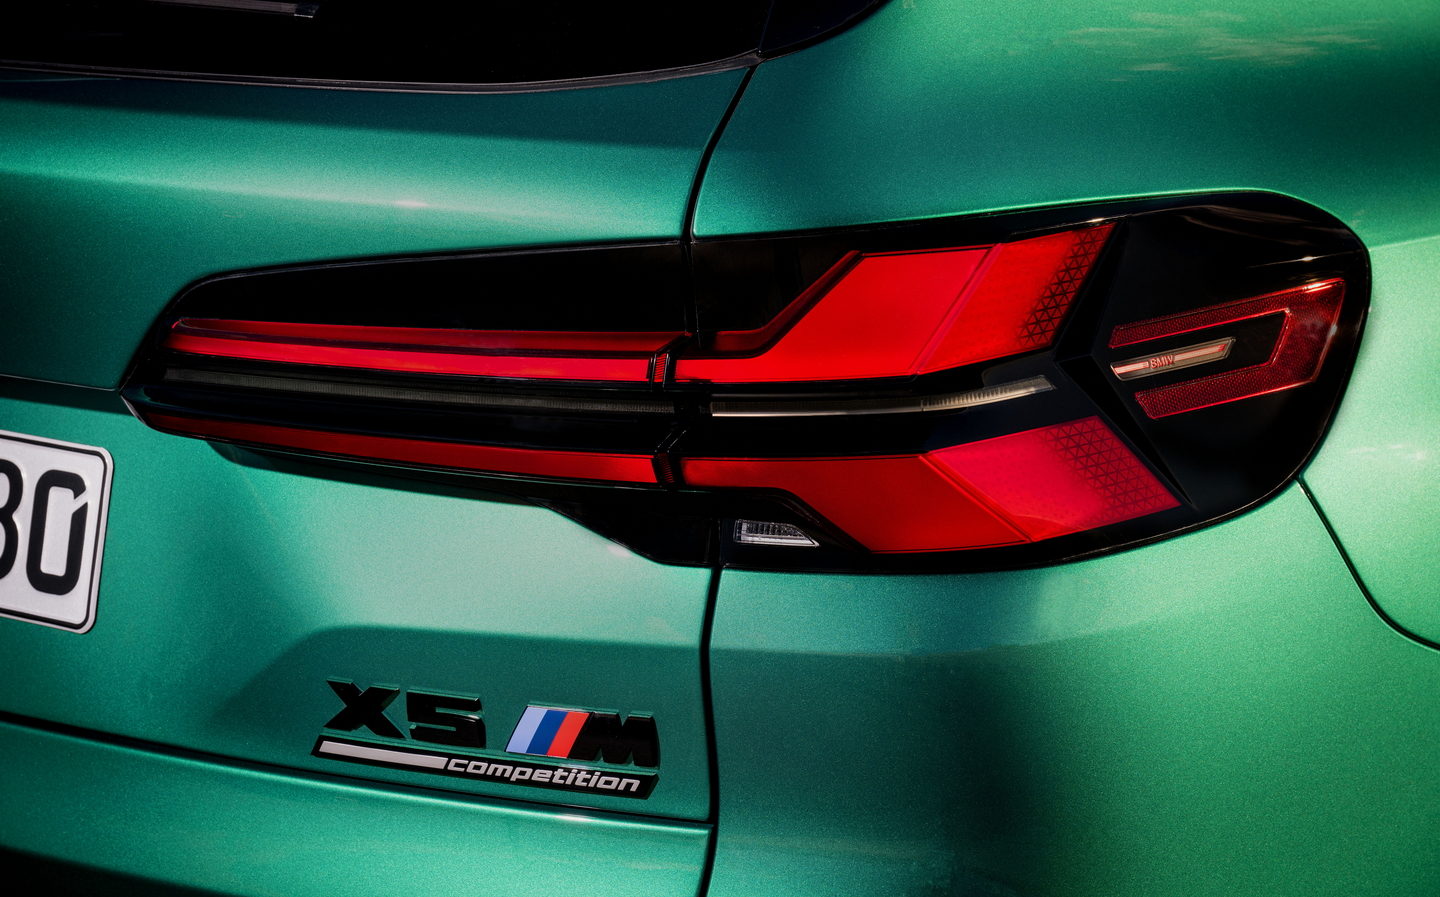 BMW X5 M static rear lights close-up